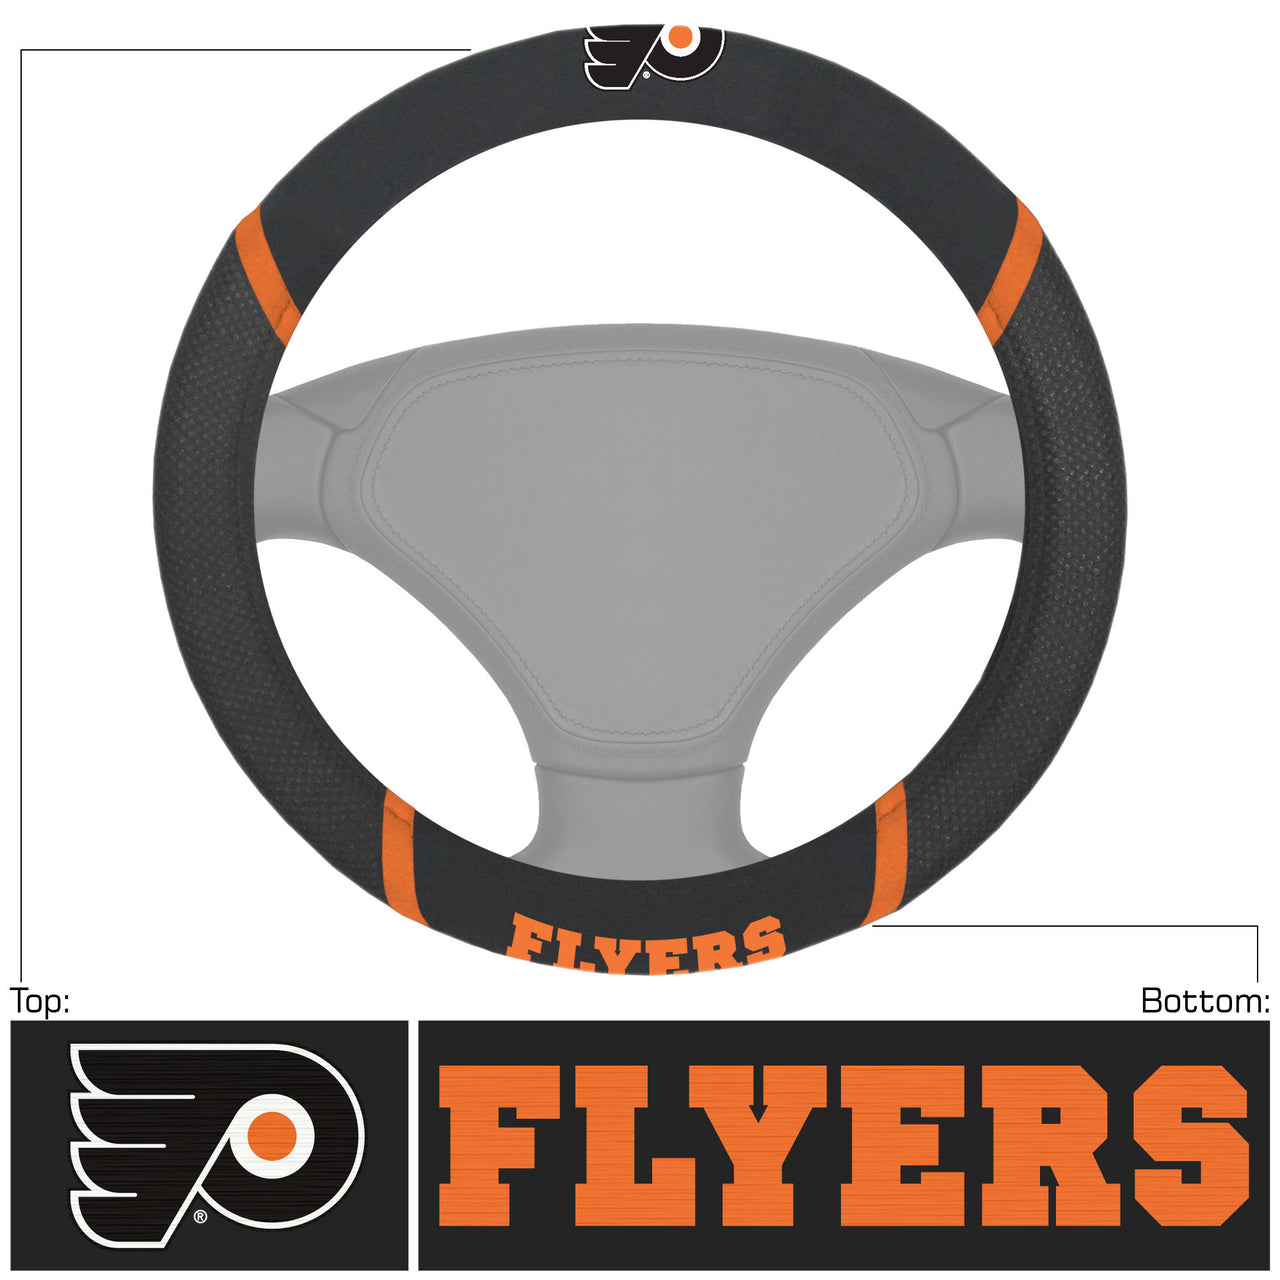 Philadelphia Flyers Deluxe Steering Wheel Cover - Dynasty Sports & Framing 